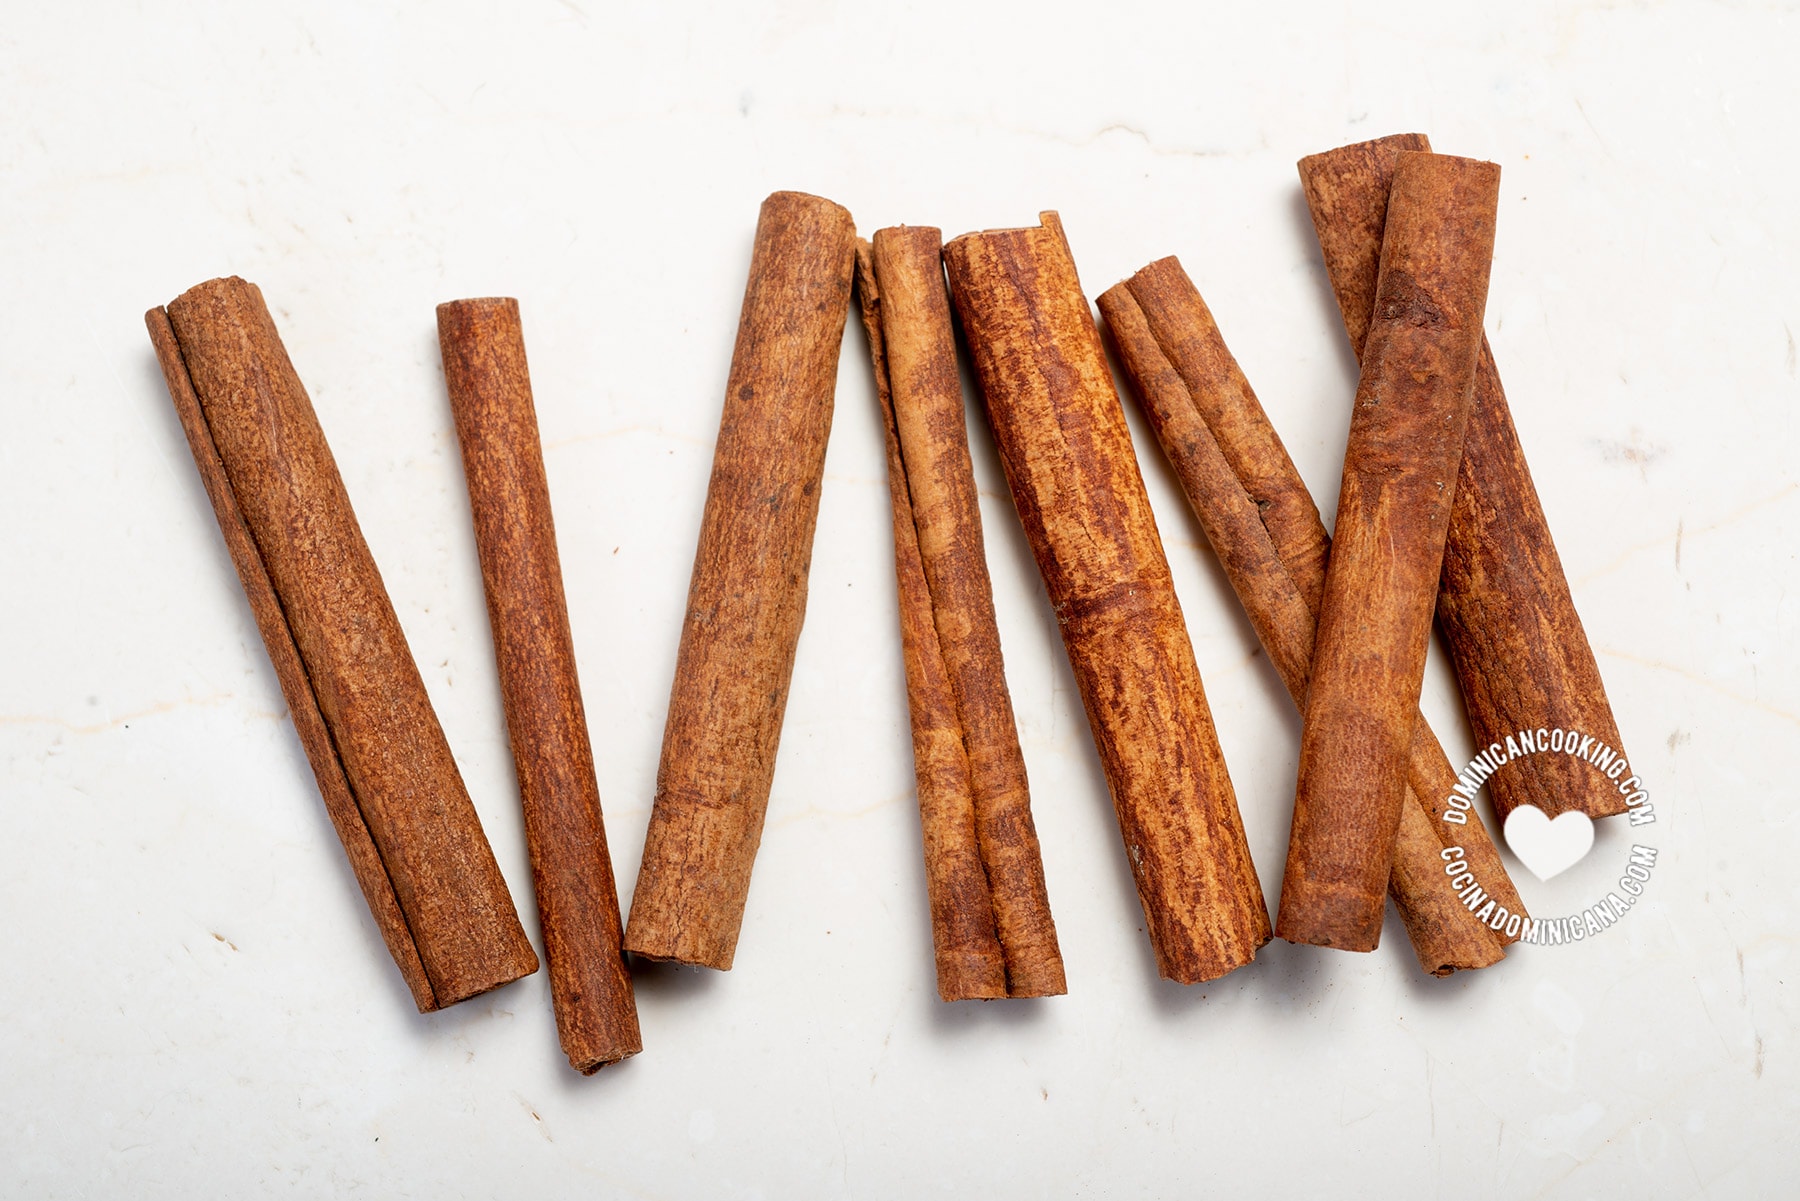 Cinnamon or canela (cinnamomum verum).